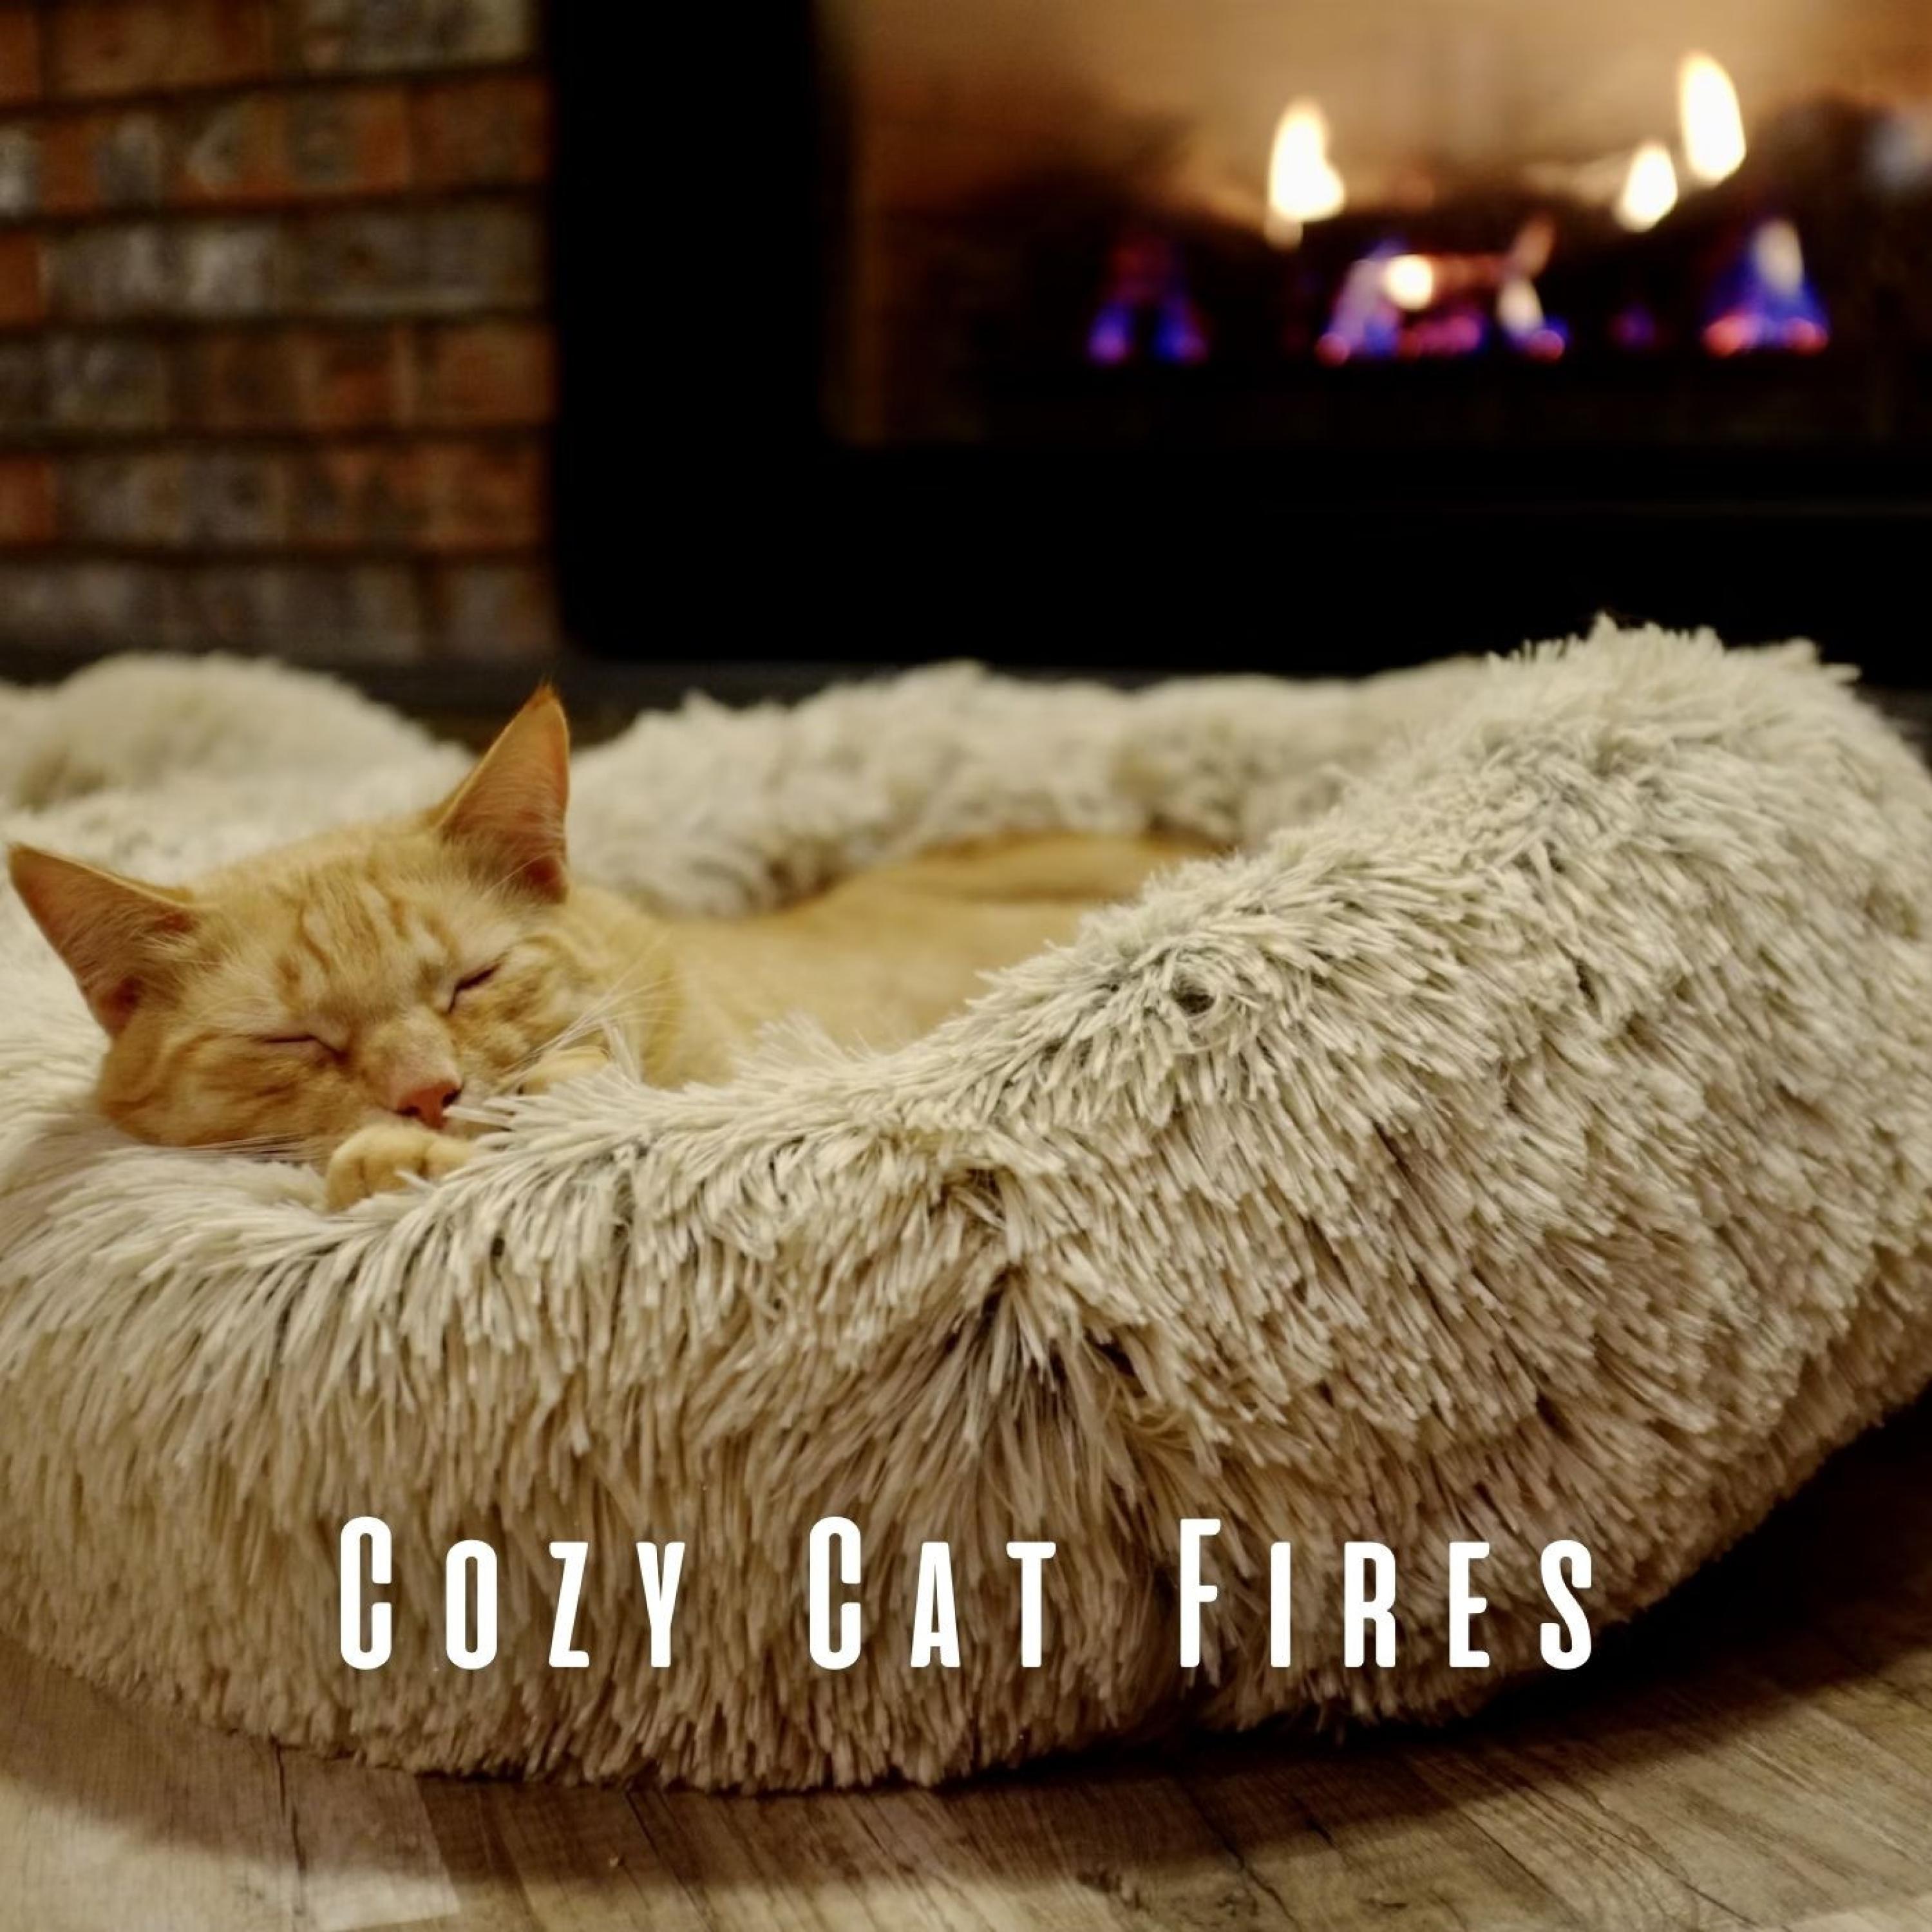 Fireplace Sounds - Cat's Delight in Gentle Ambient Tones